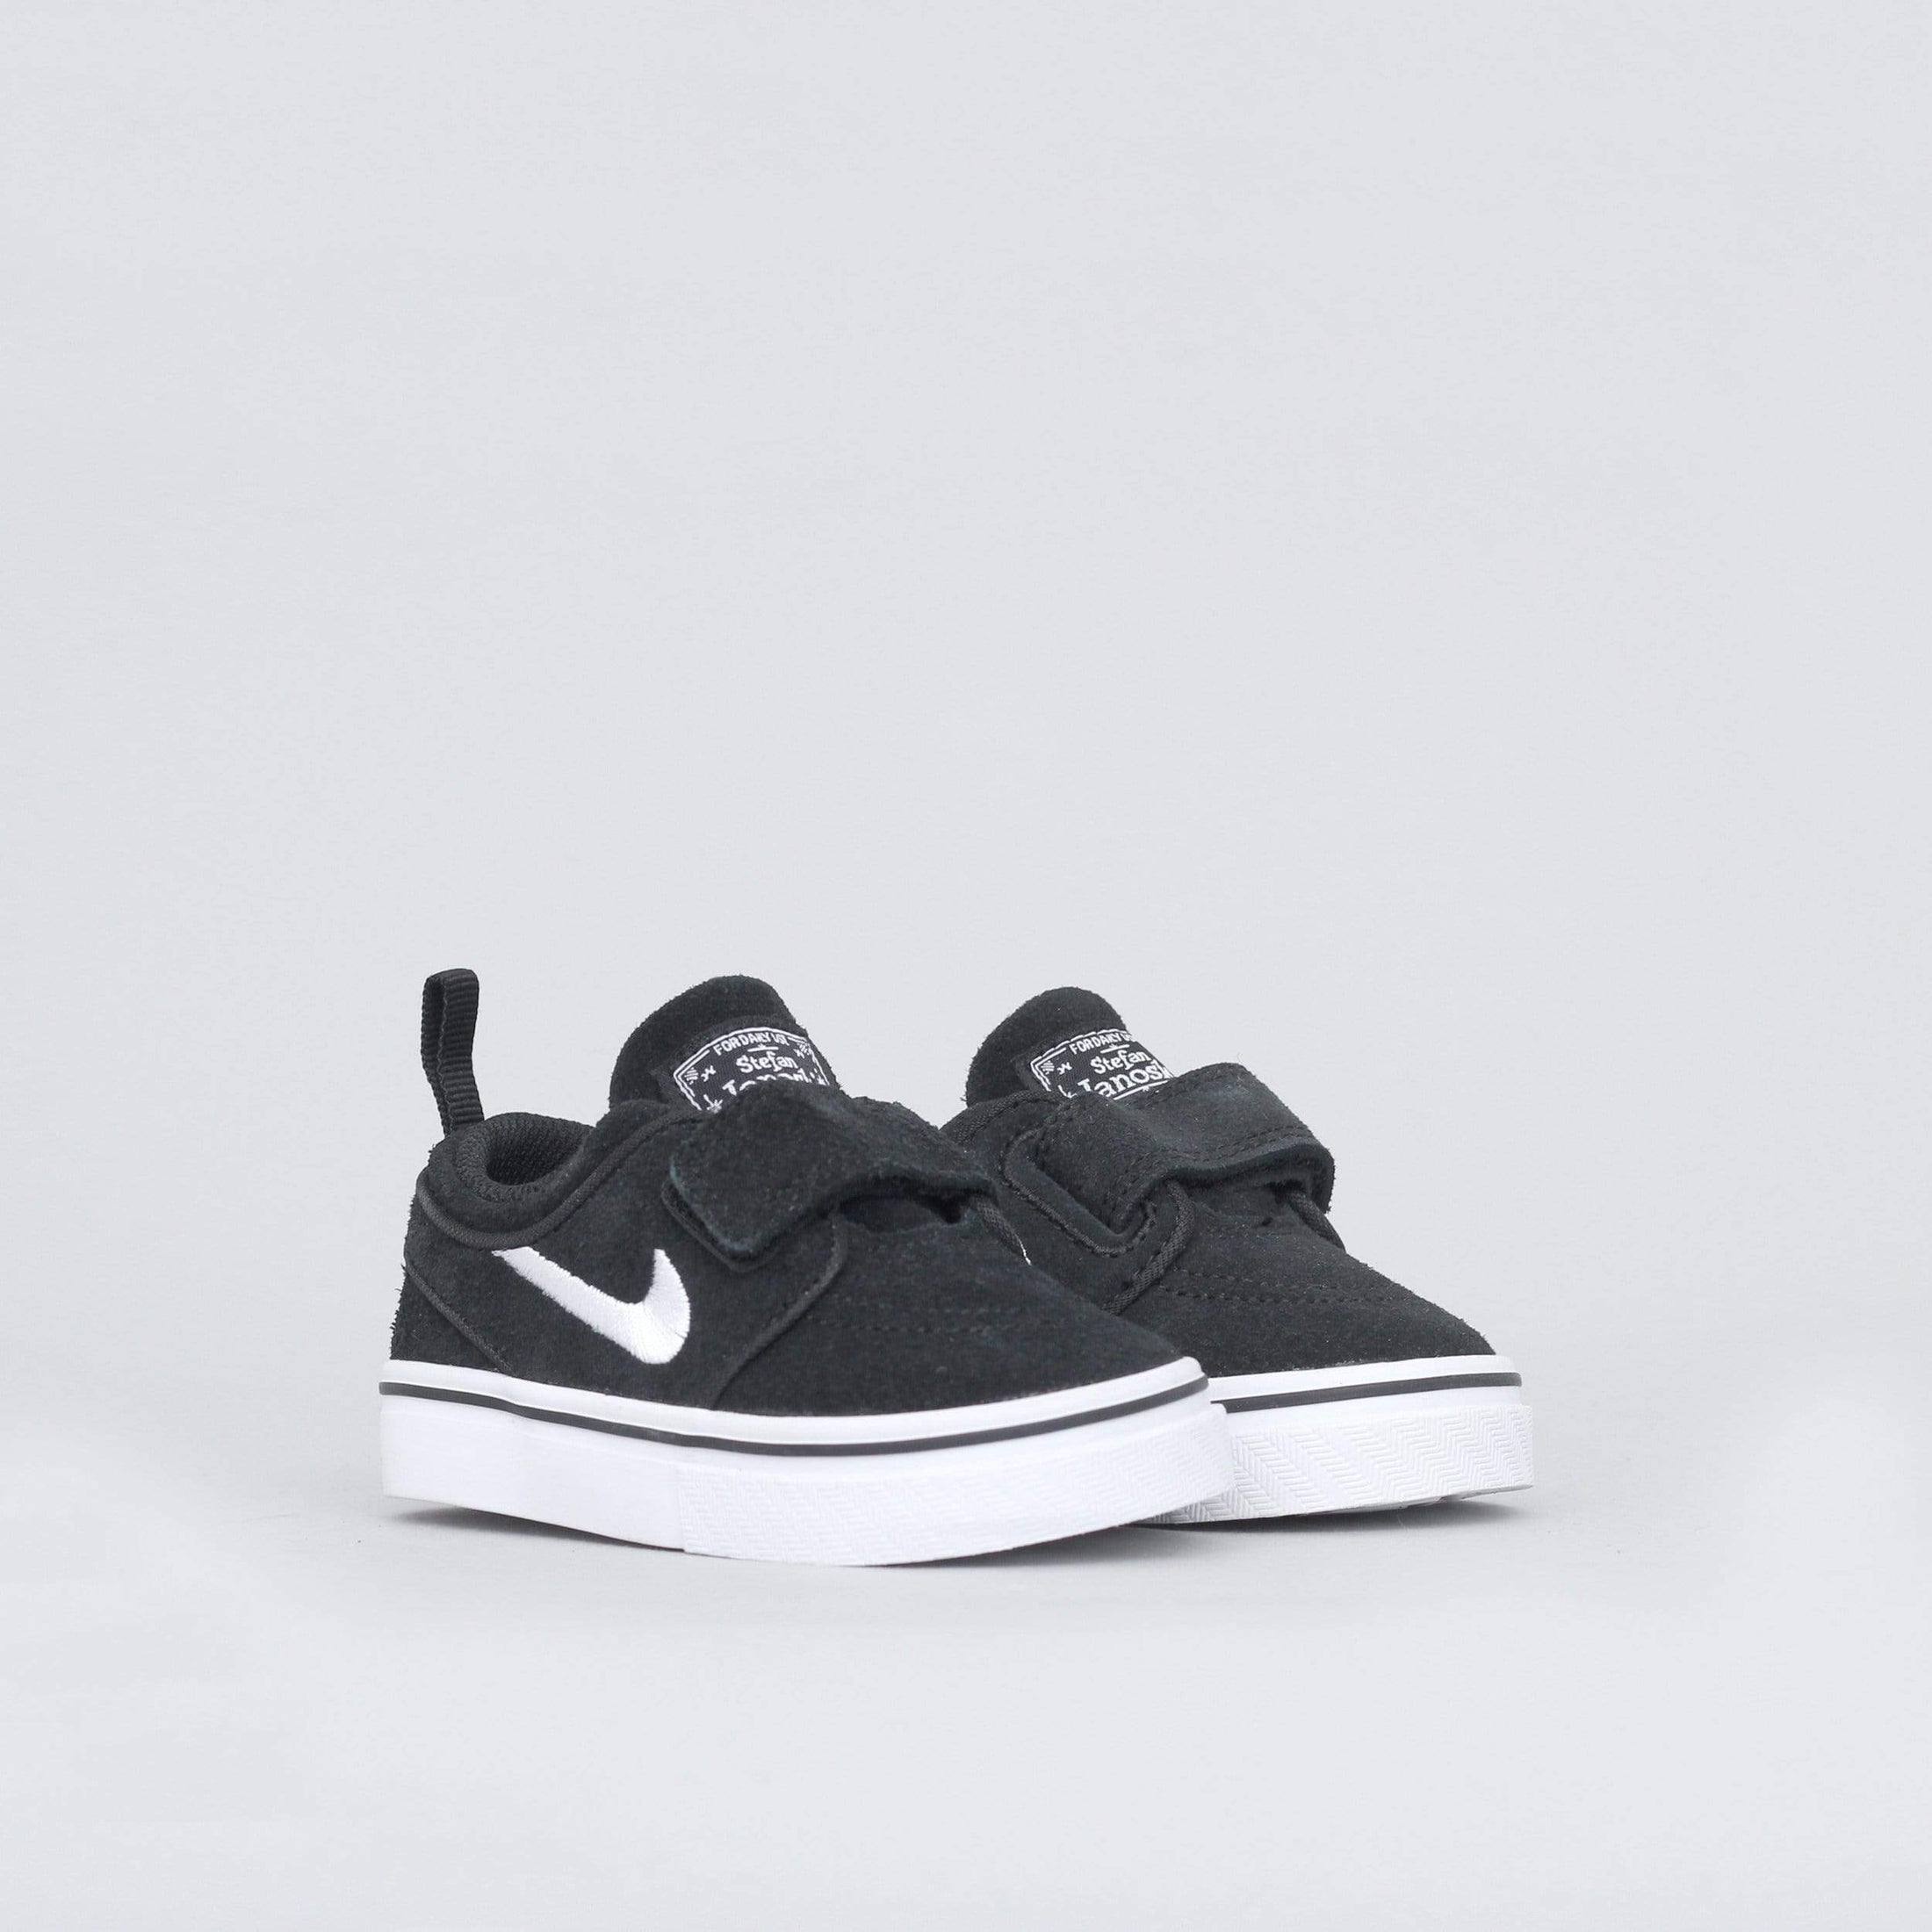 Nike SB Stefan Janoski AC TD Child Shoes Black / White